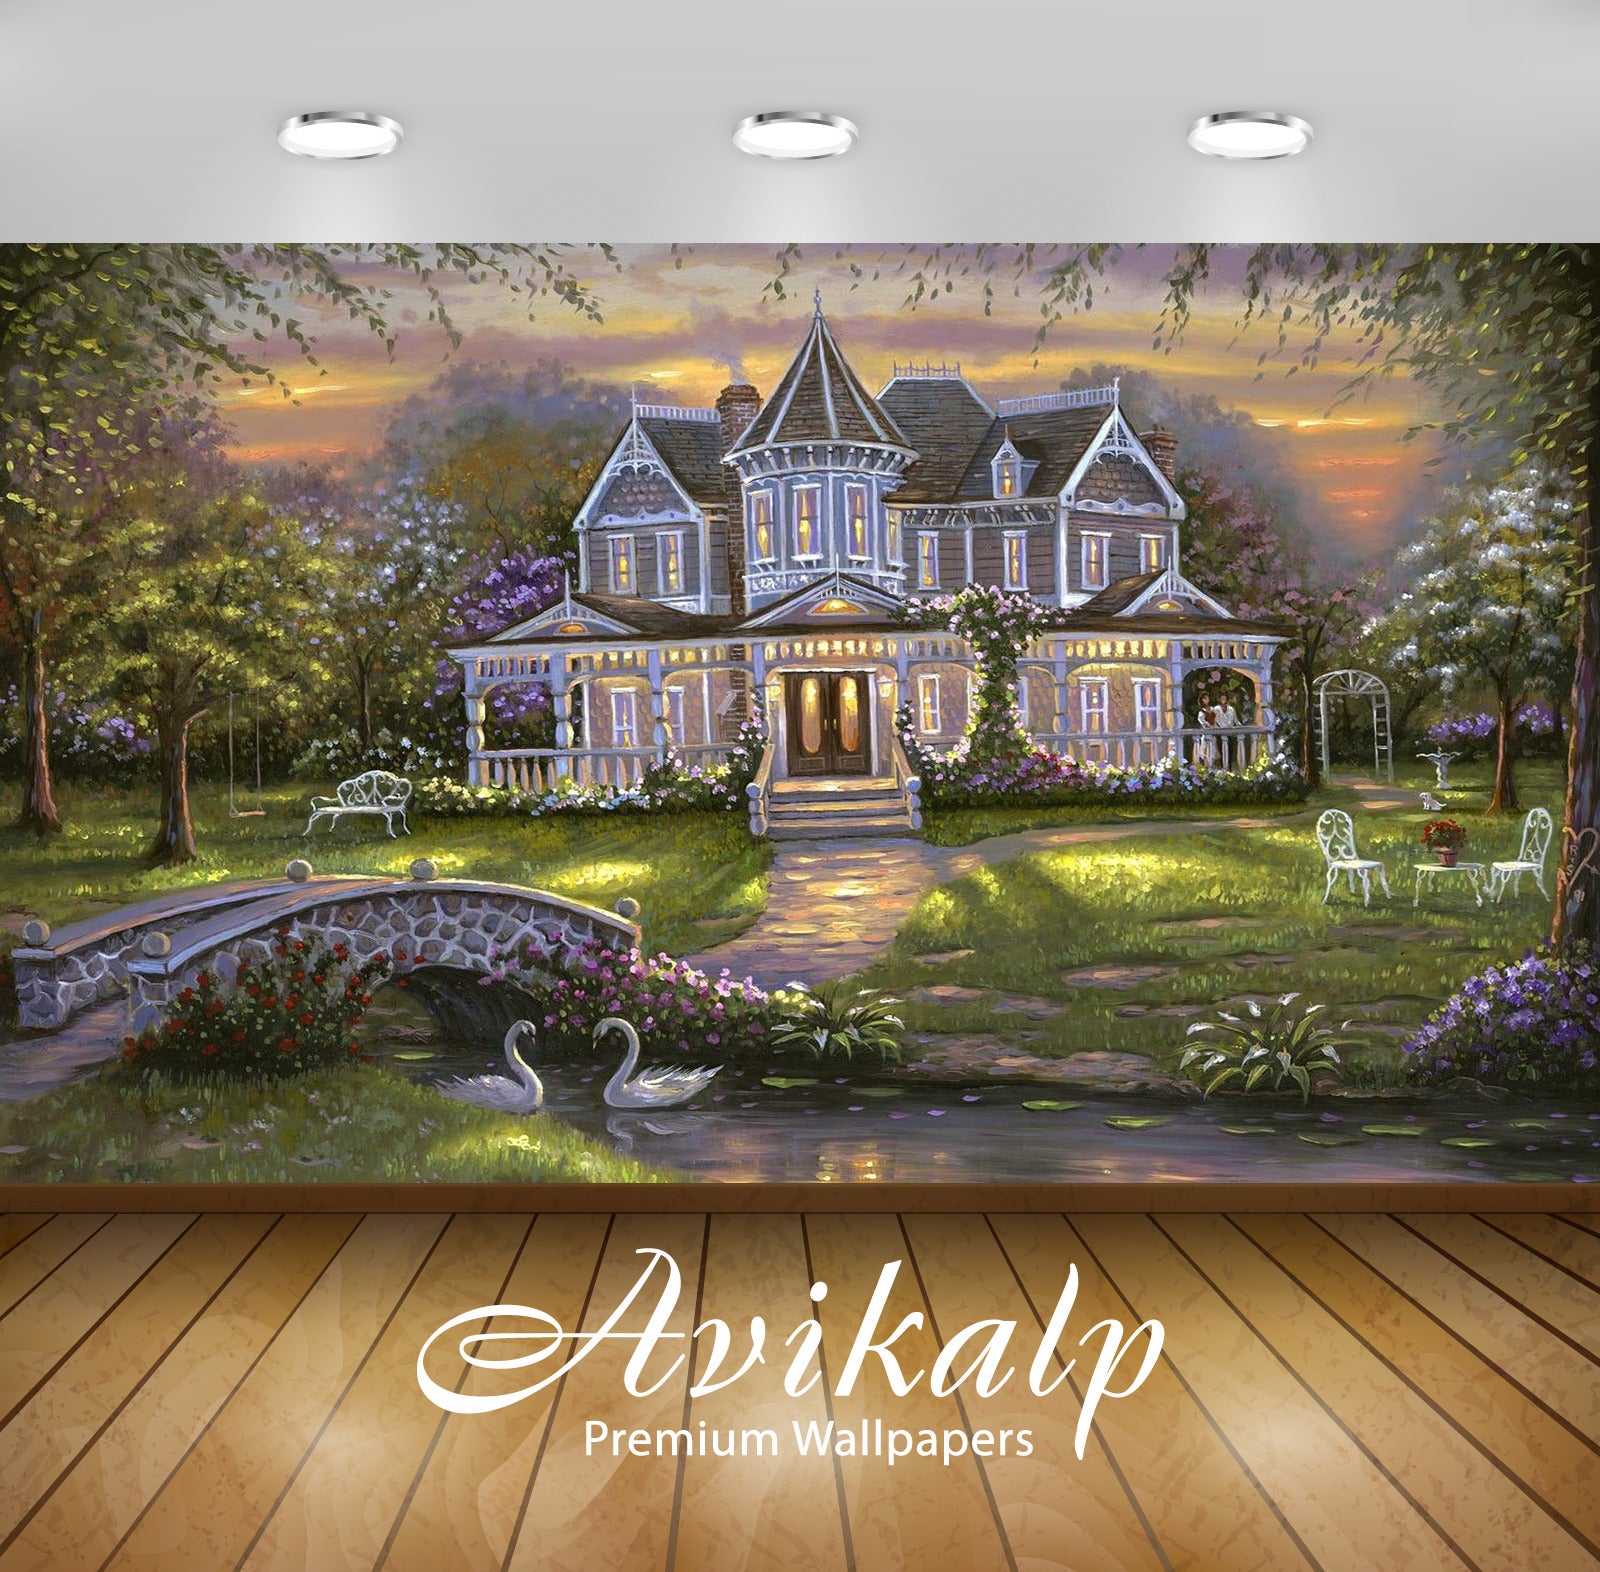 Avikalp Exclusive Awi2776 Landscape House River Bridge Swans Art Full HD Wallpapers for Living room,